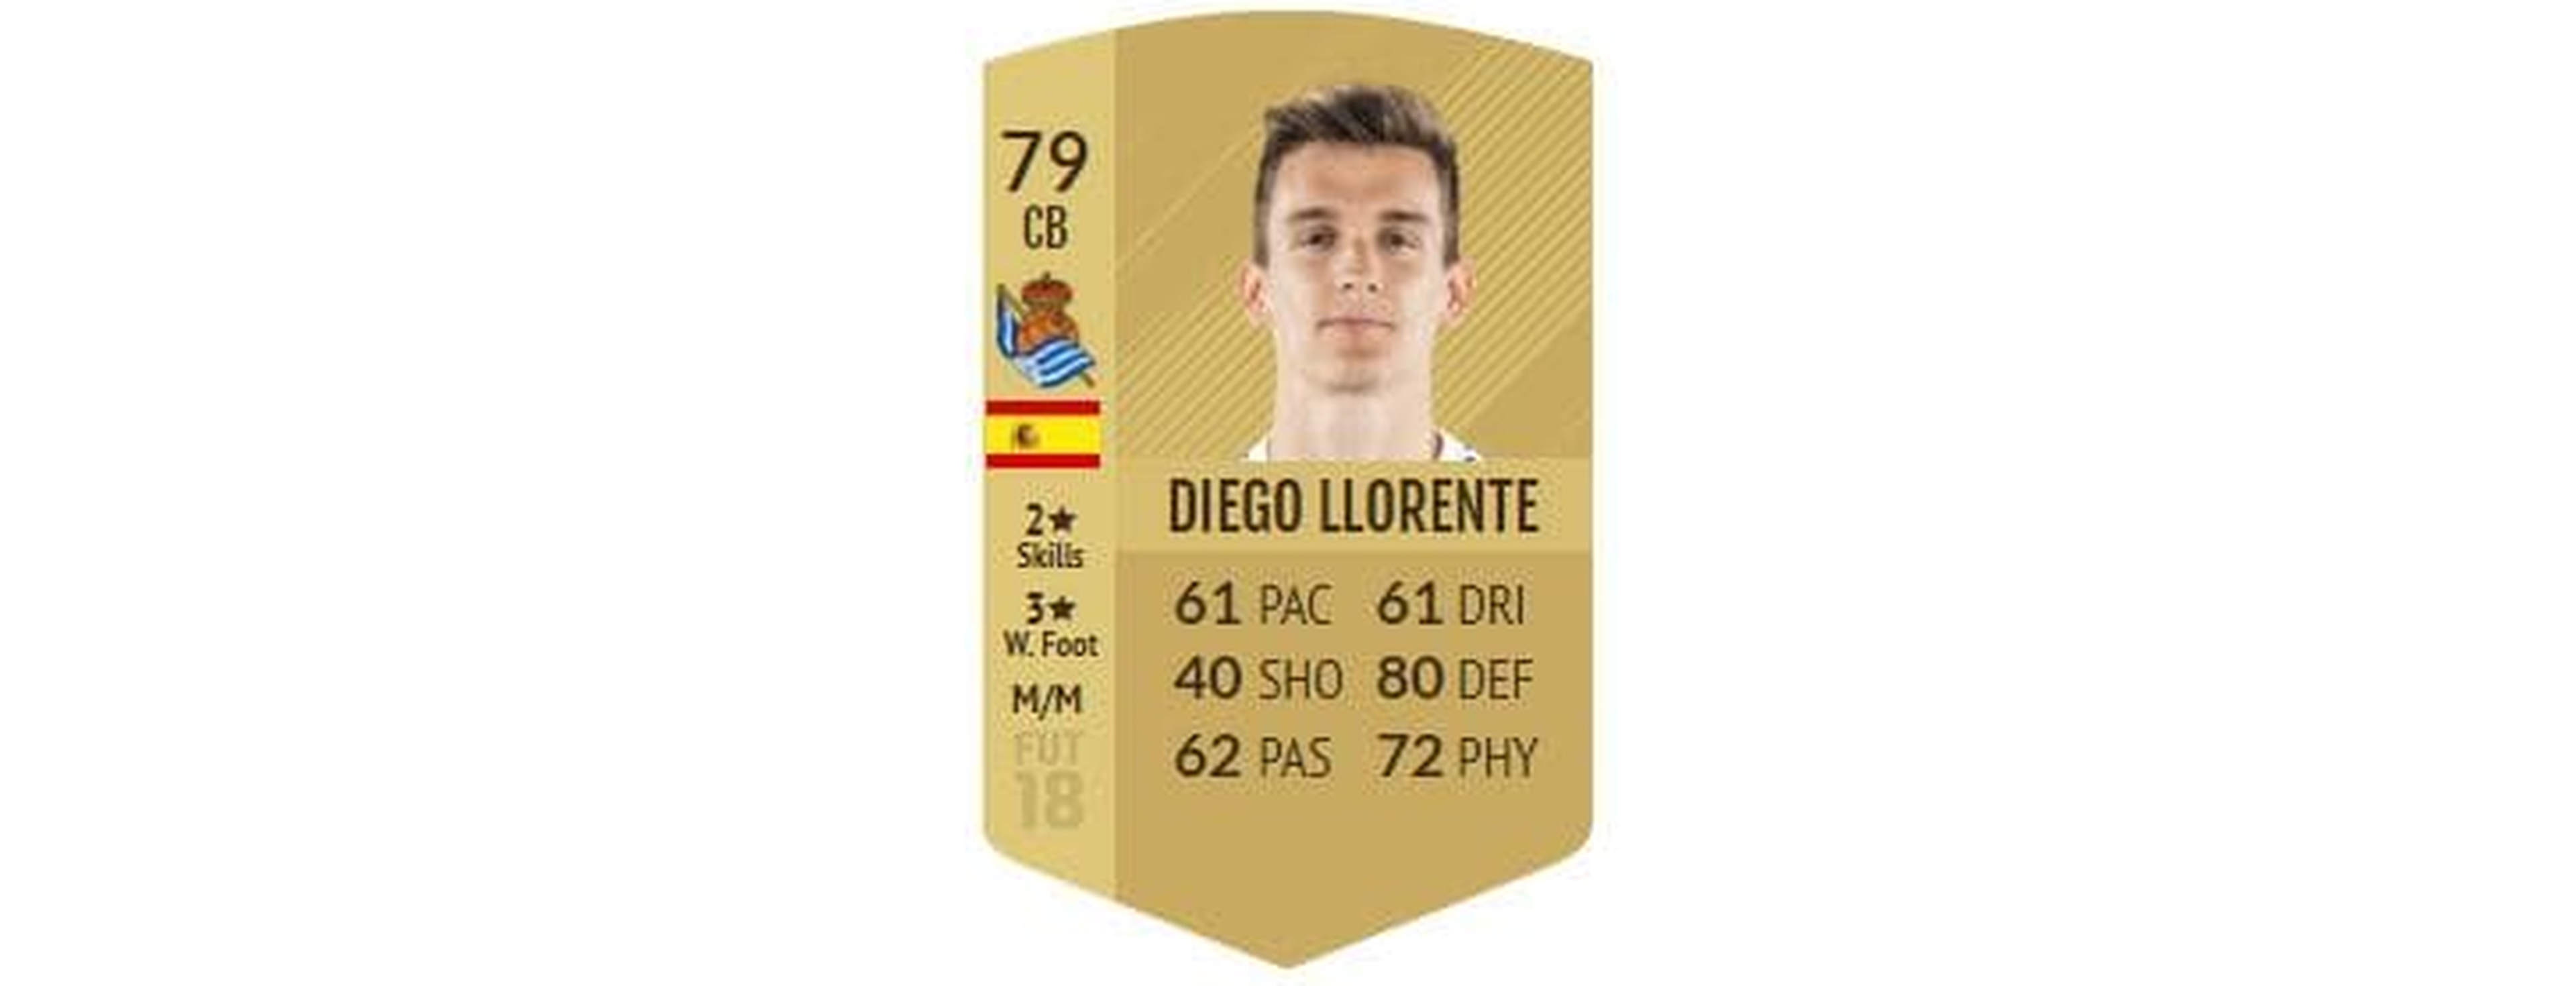 FIFA 18 - Diego Llorente